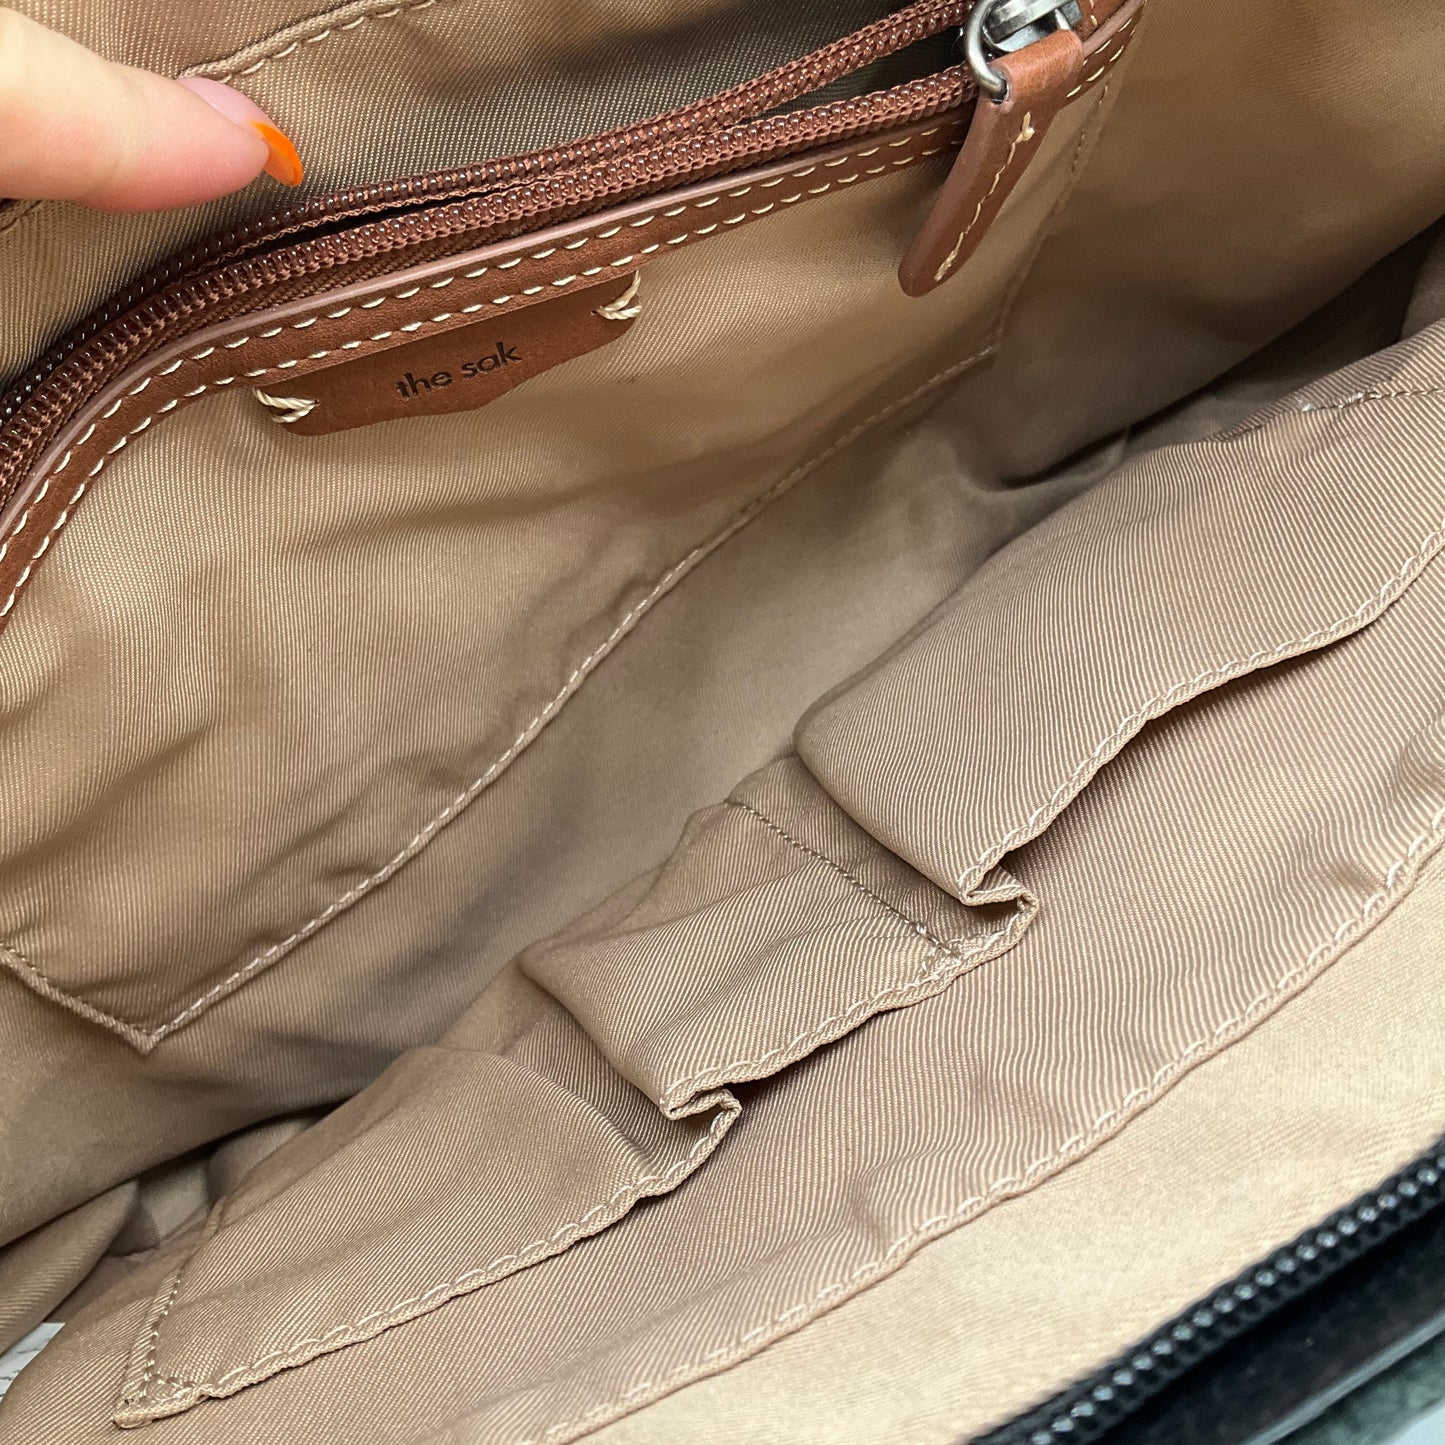 Handbag The Sak, Size Medium